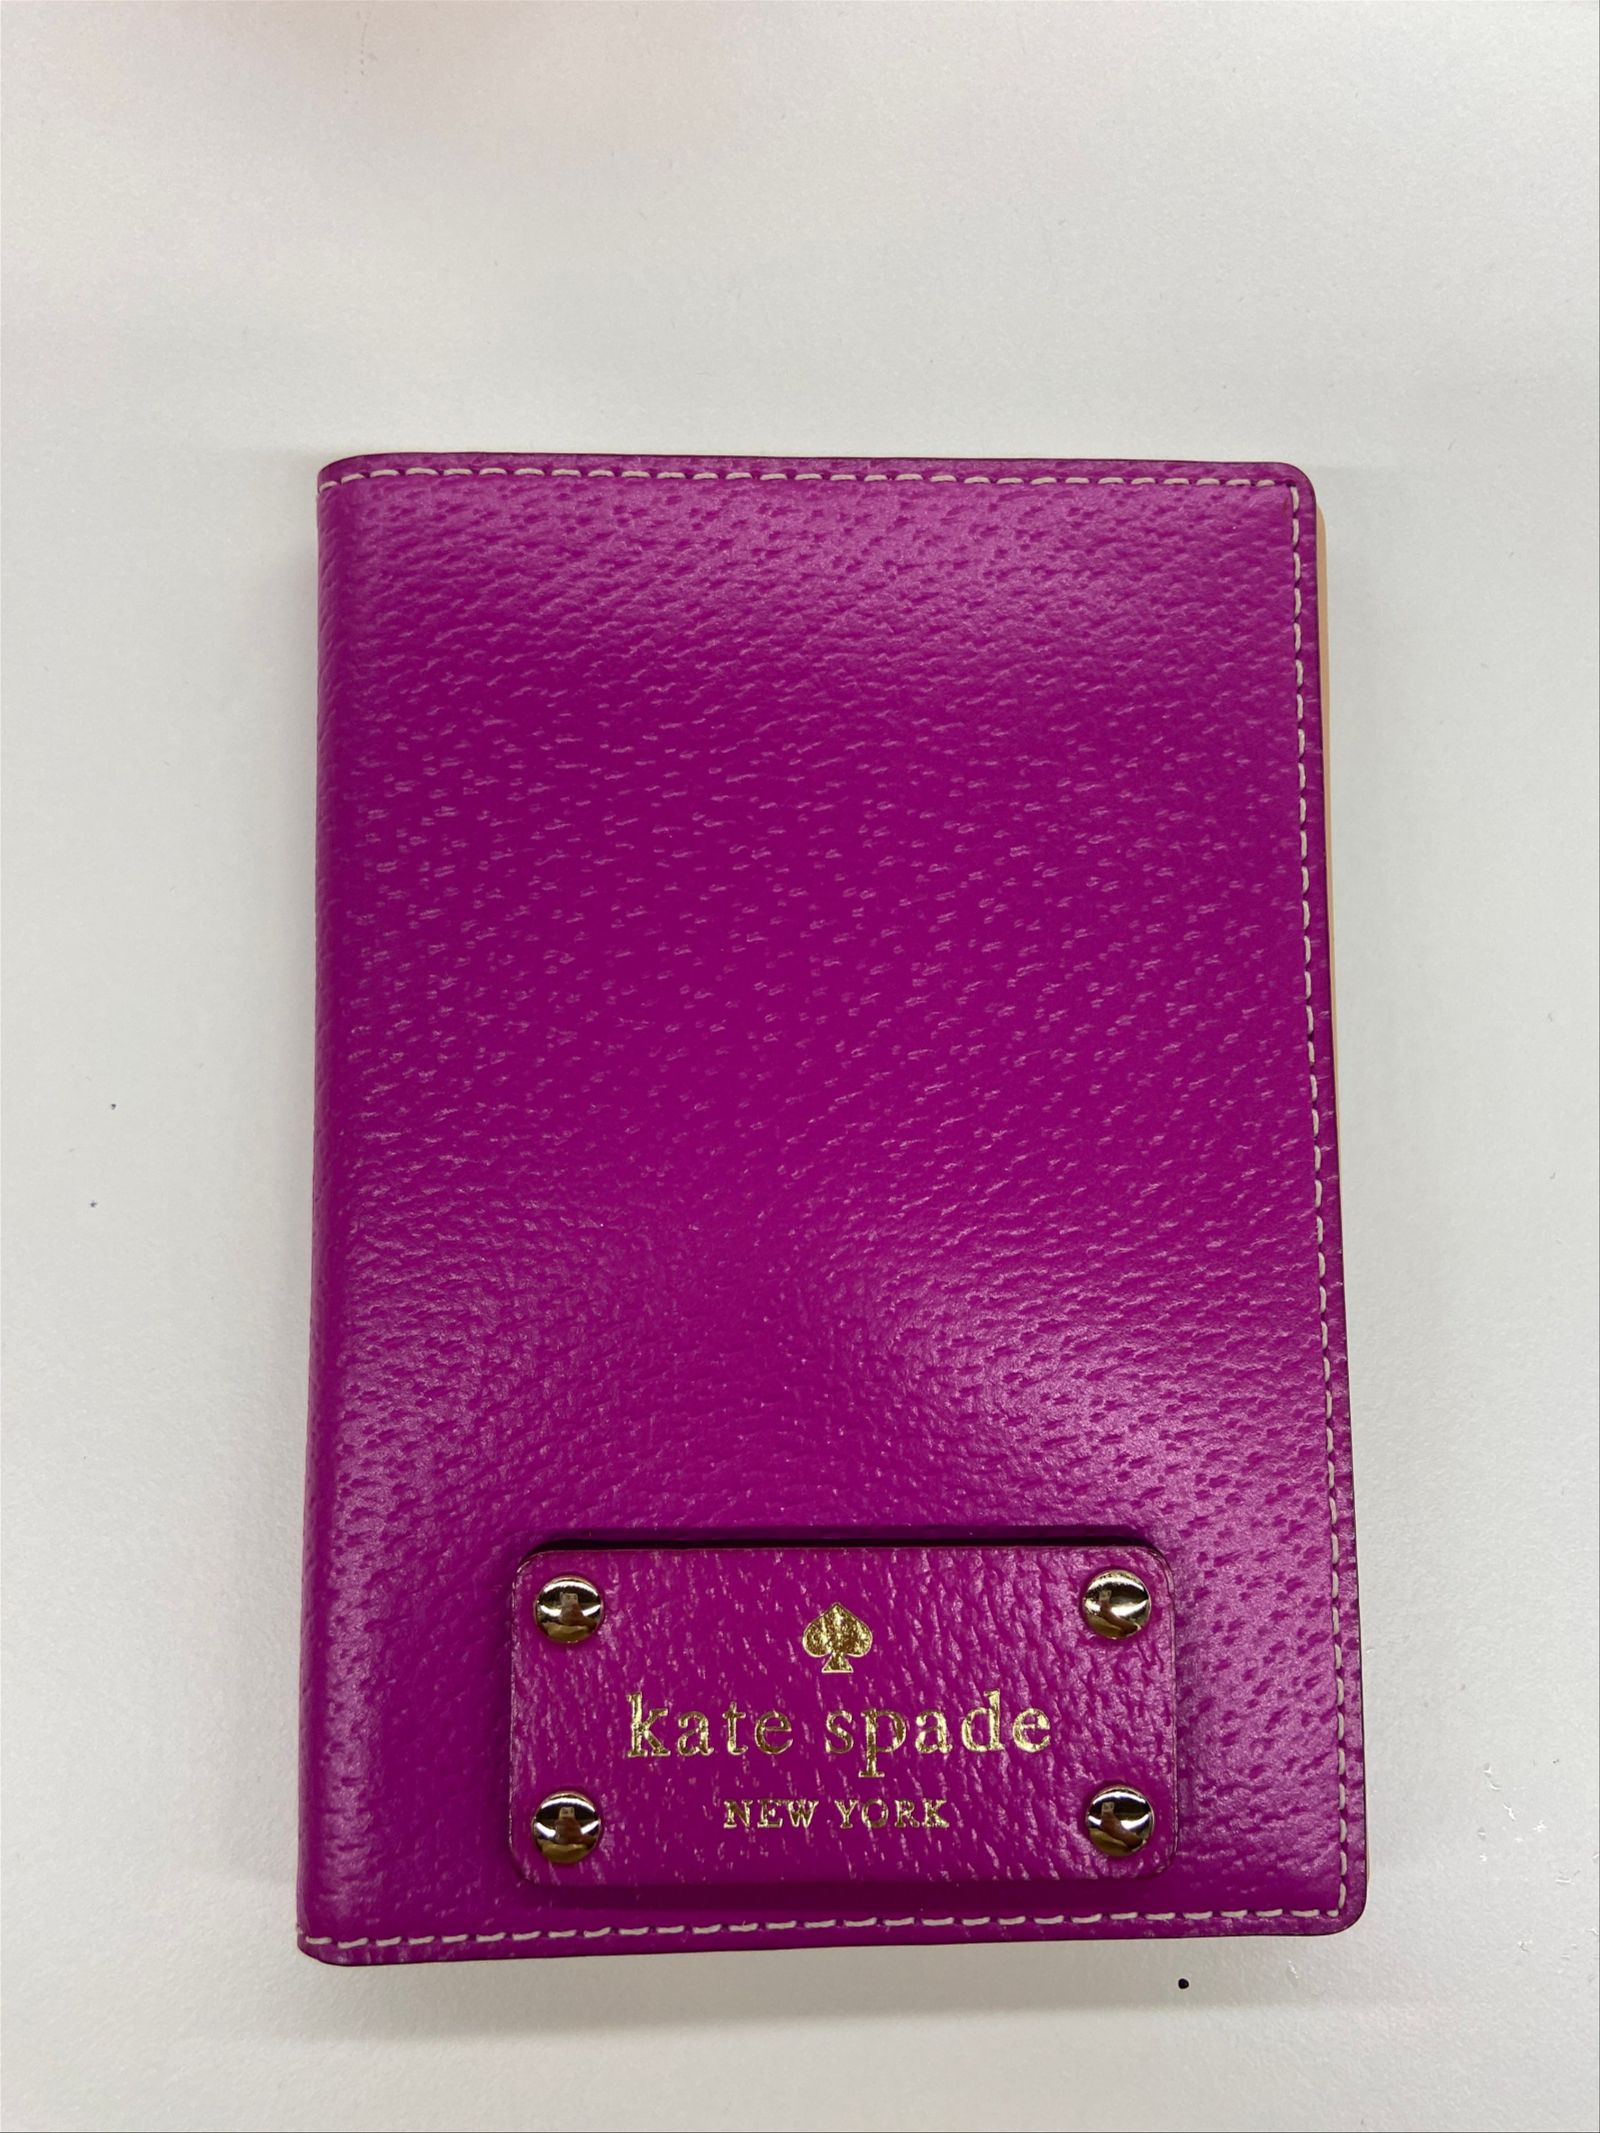 Kate Spade Wellesley Passport Holder in Fuchsia Pink